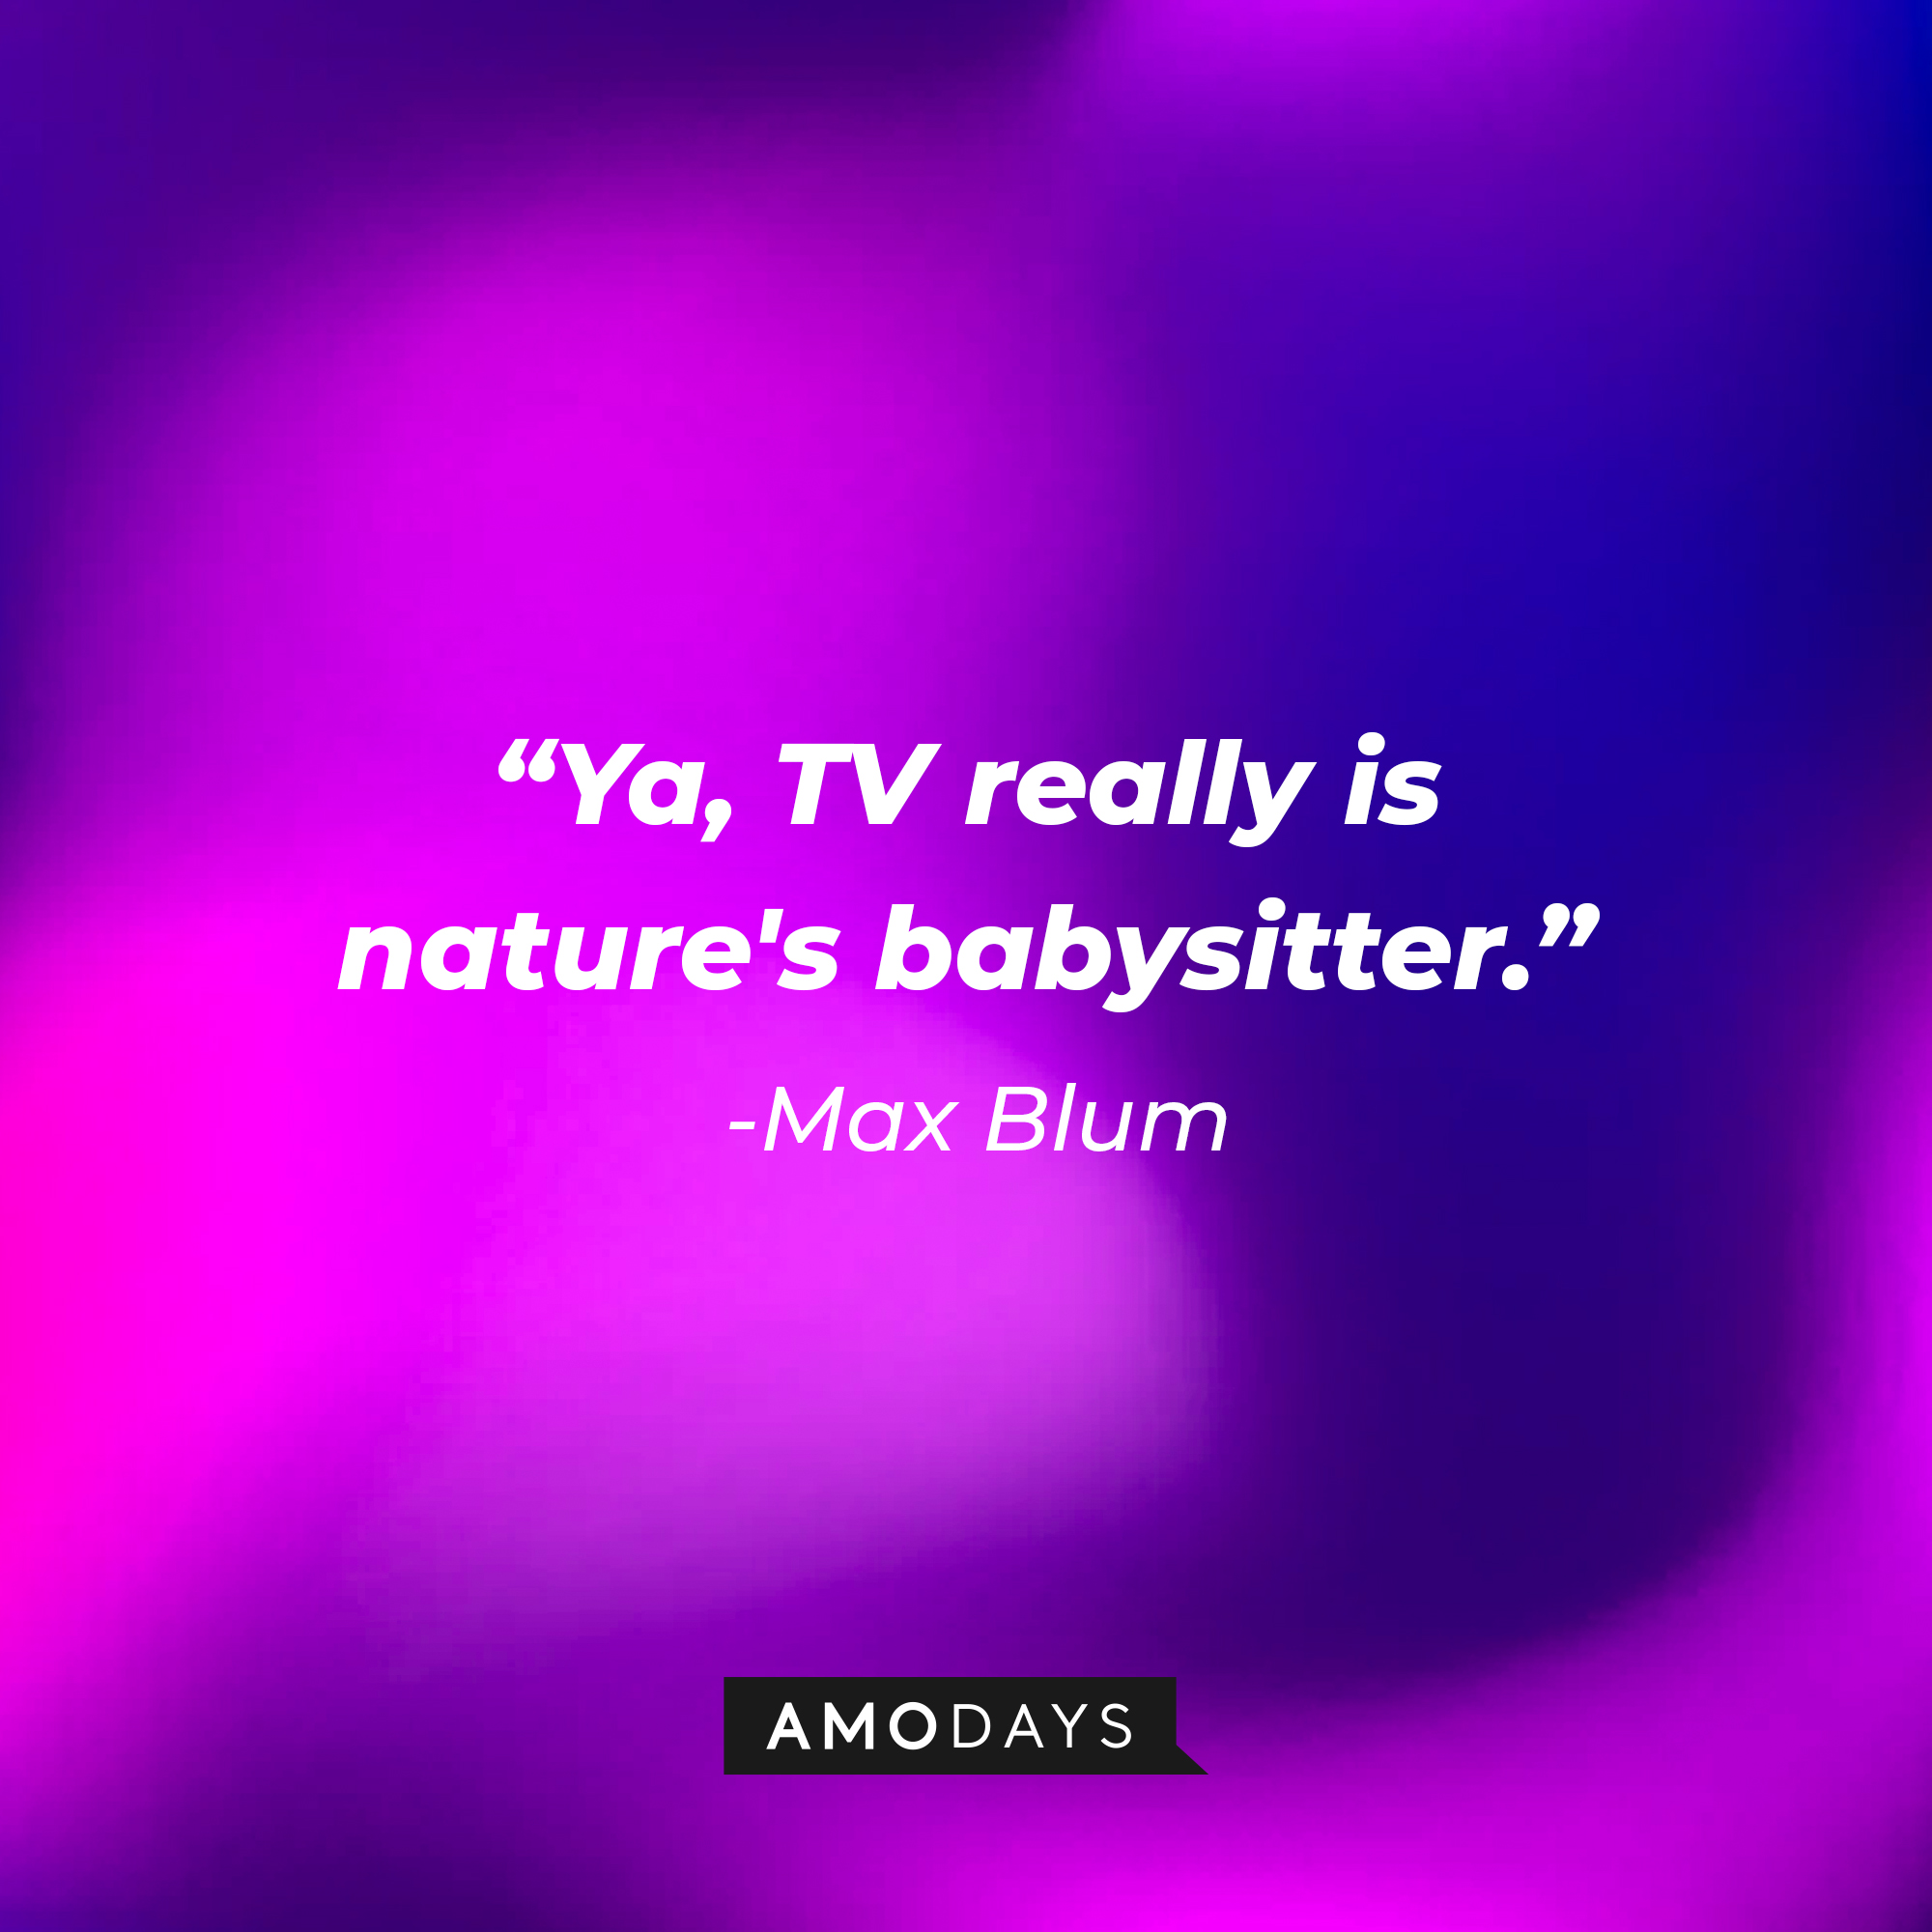 Max Blum's quote "Ya, TV really is nature's babysitter." | Source: Facebook/HappyEndings